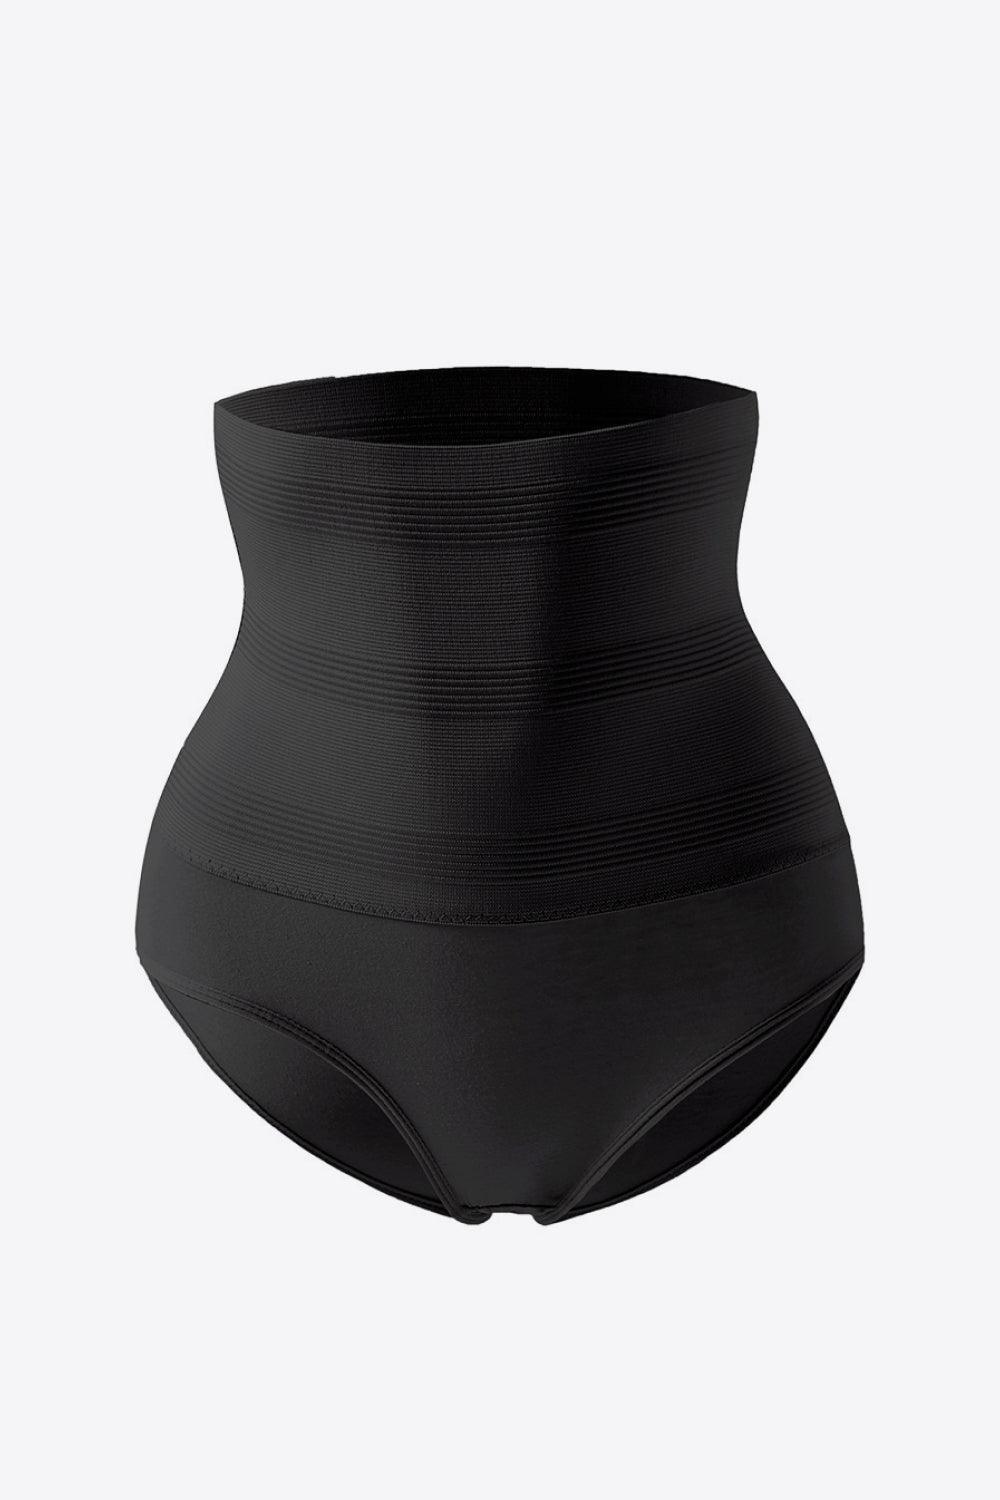 Ribbed Pull-On Black Shapewear Shorts - MXSTUDIO.COM